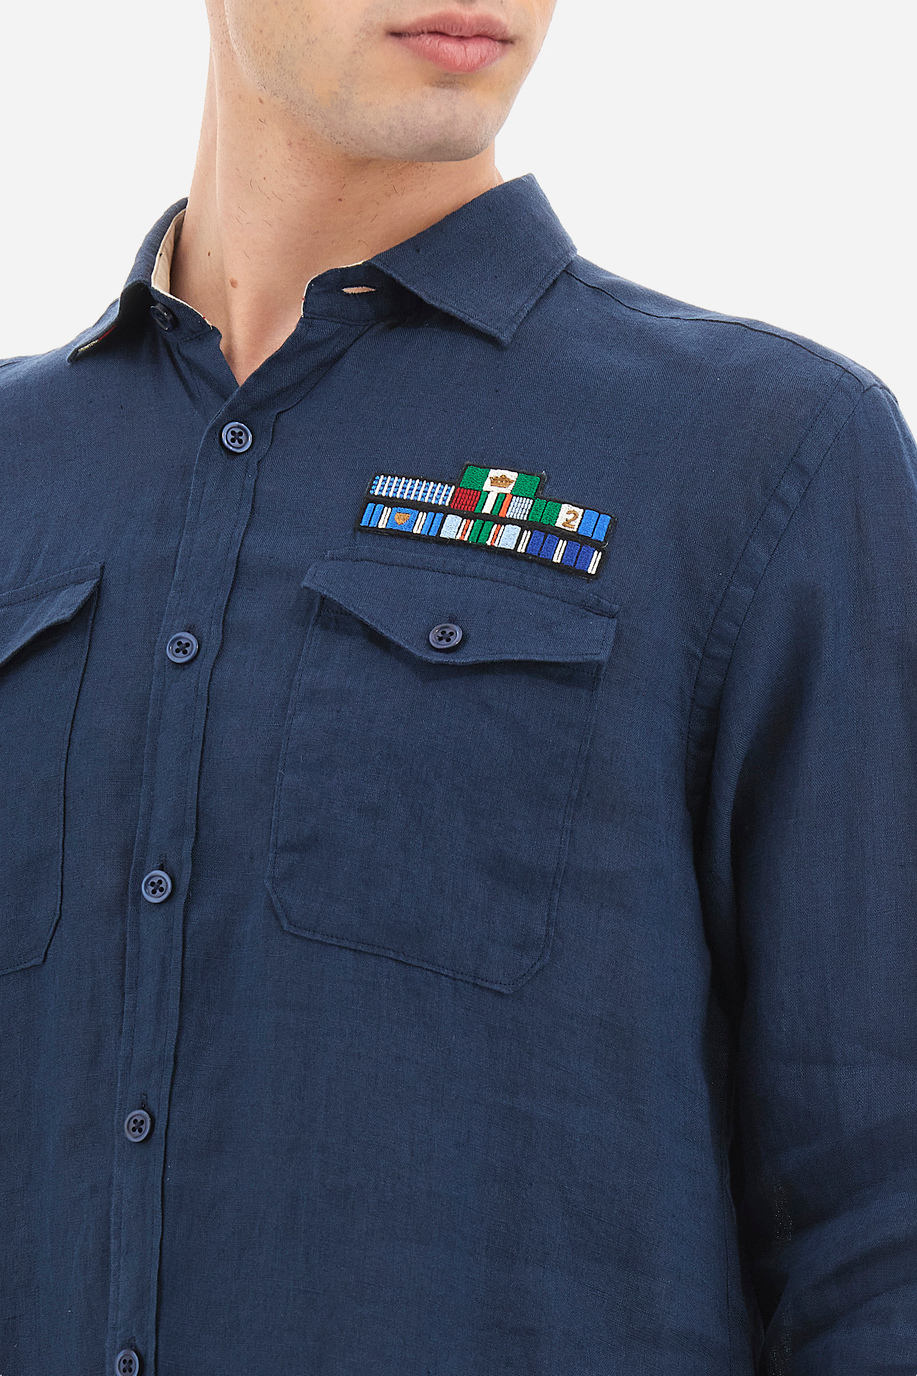 Langärmliges Herrenhemd aus 100 % Leinen in normaler Passform - Viviano - Guards - England | La Martina - Official Online Shop